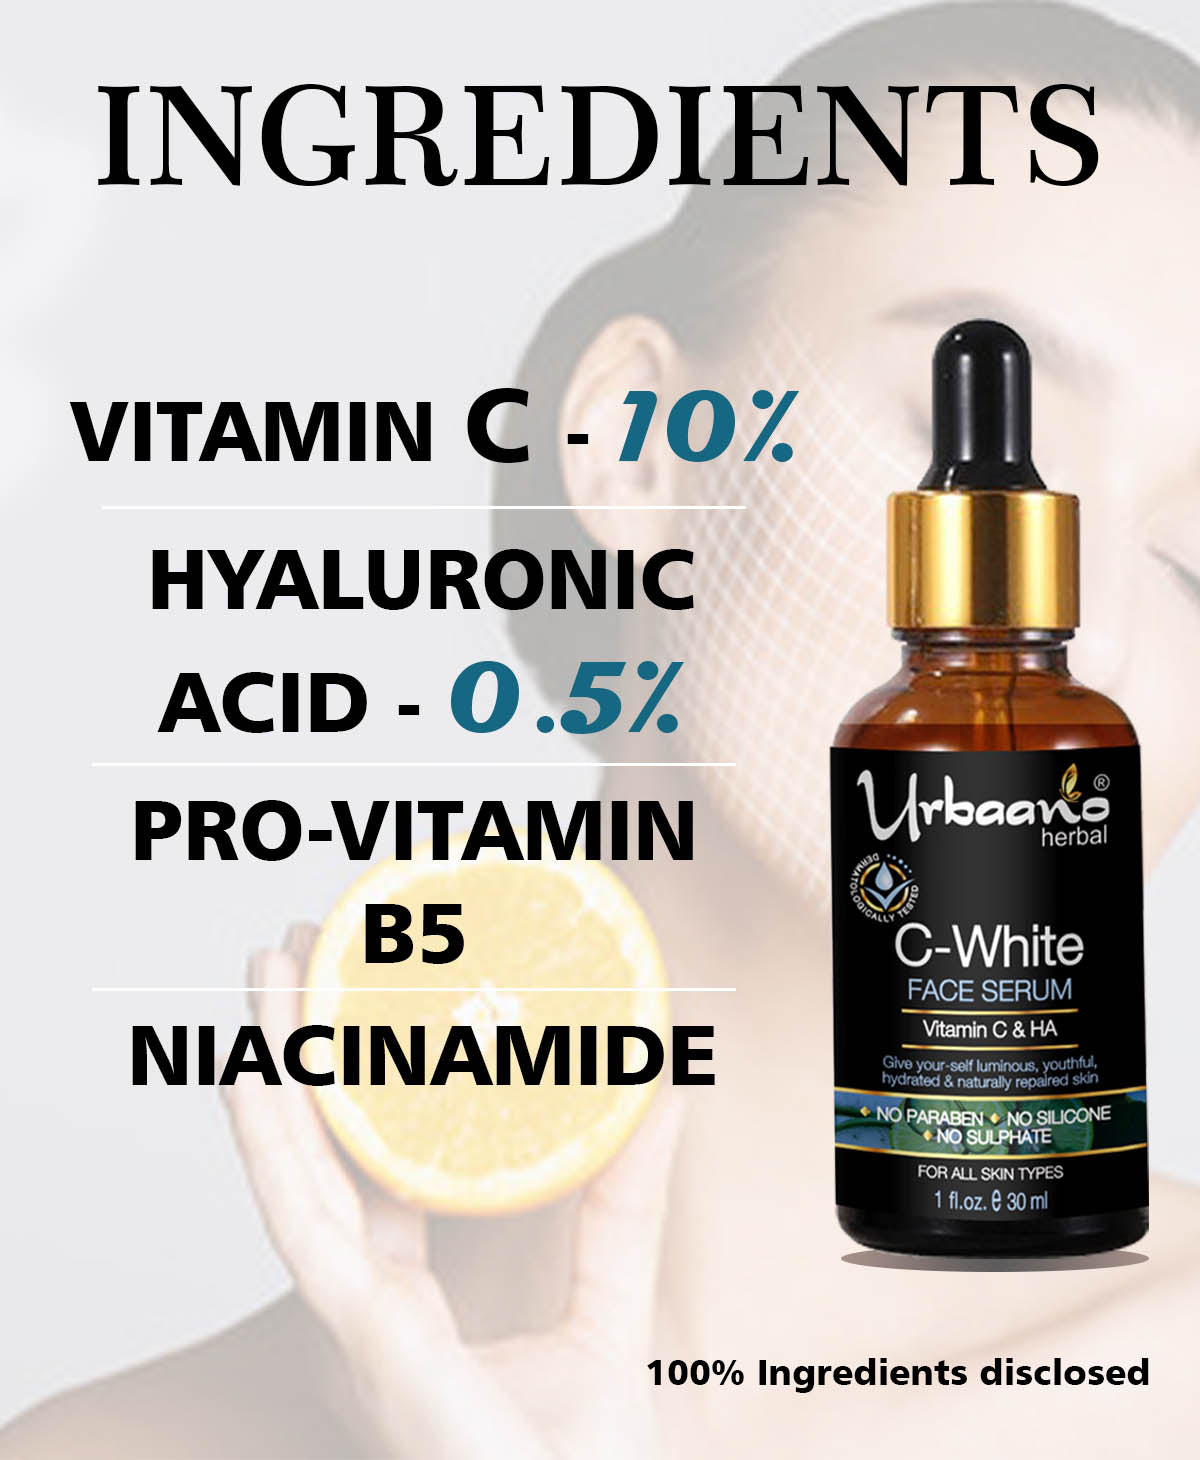 urbaano herbal skin brightening face cream and vitamin c white face serum with hyaluronic acid, vitamin B and niacinmide for skin lightening & firming